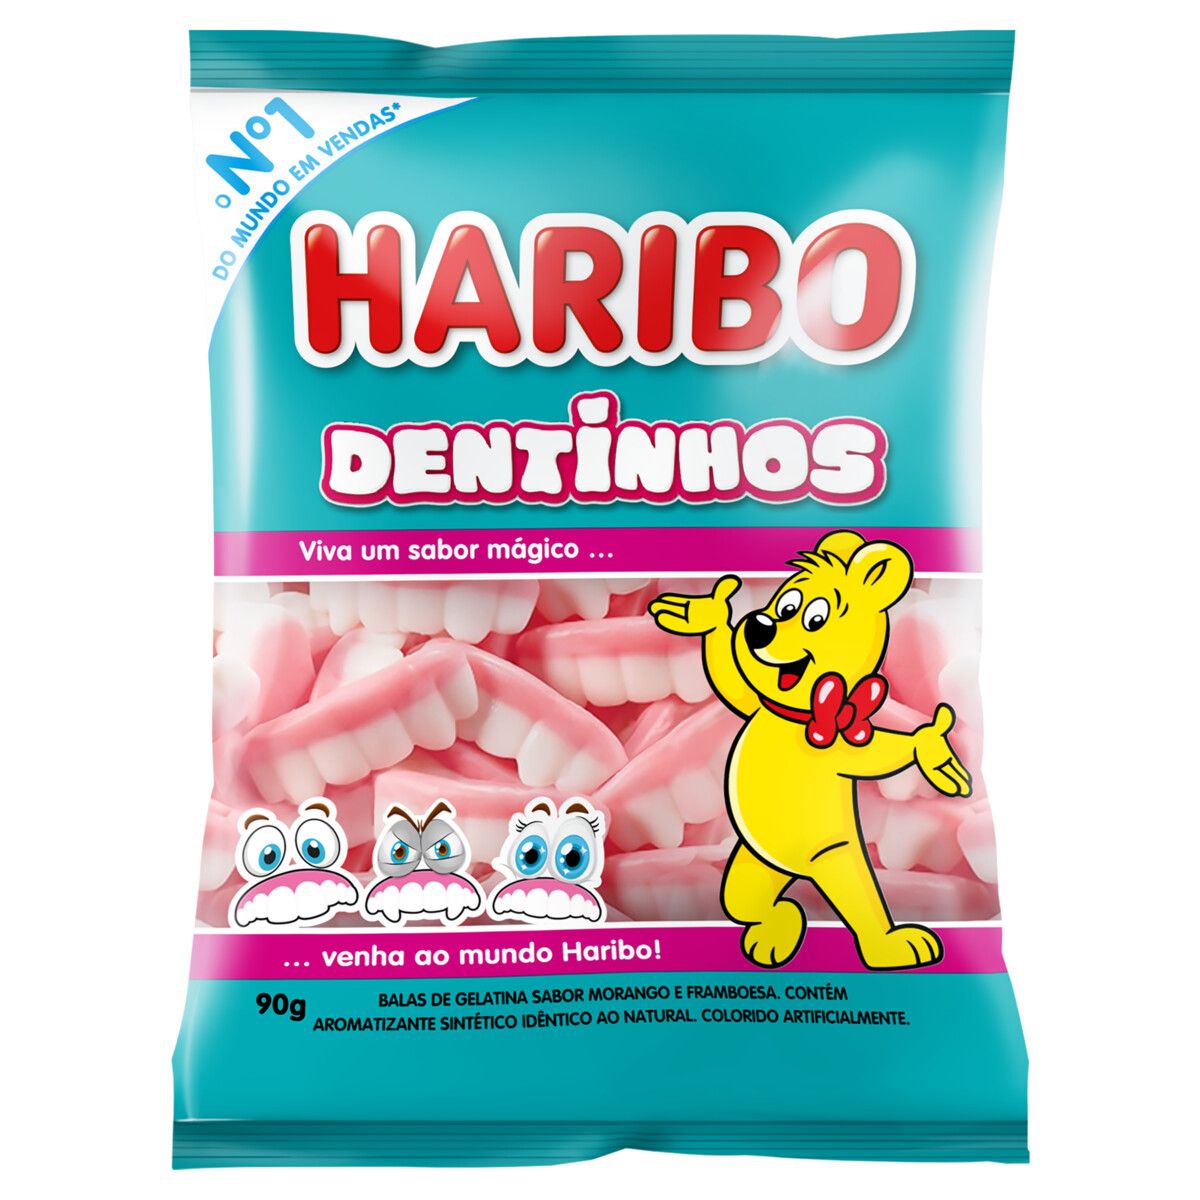 Bala de Gelatina Haribo Morango e Framboesa Dentinhos 90g image number 0